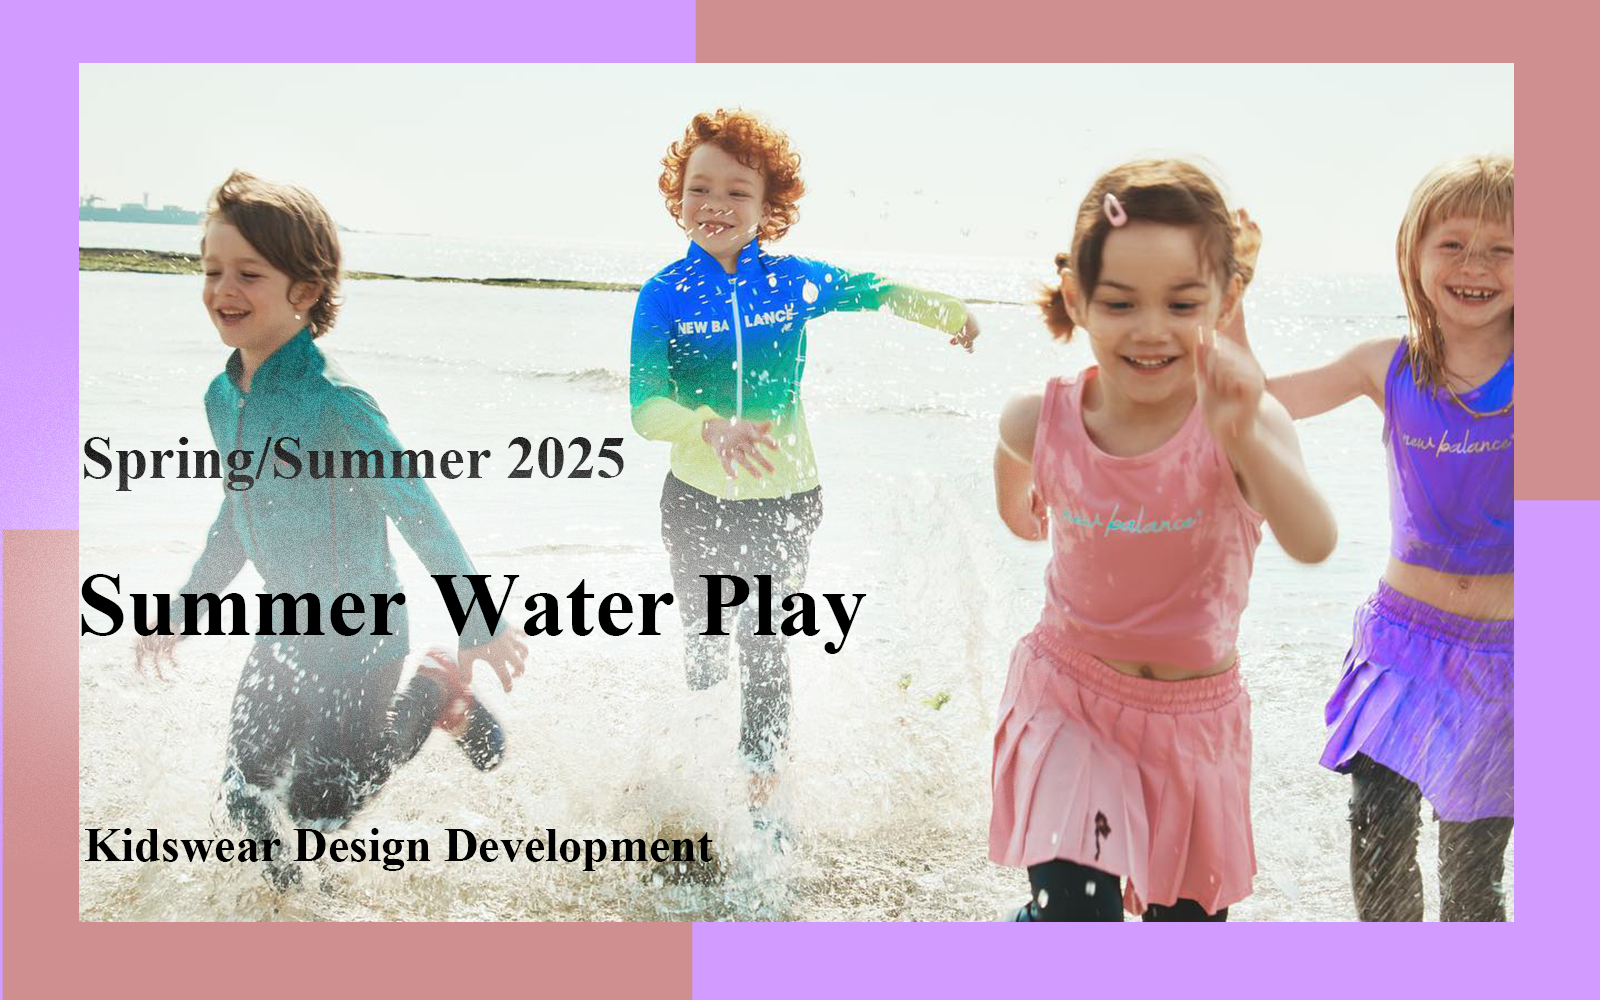 Summer Water Play -- The Design Development of Kids' Beachwear